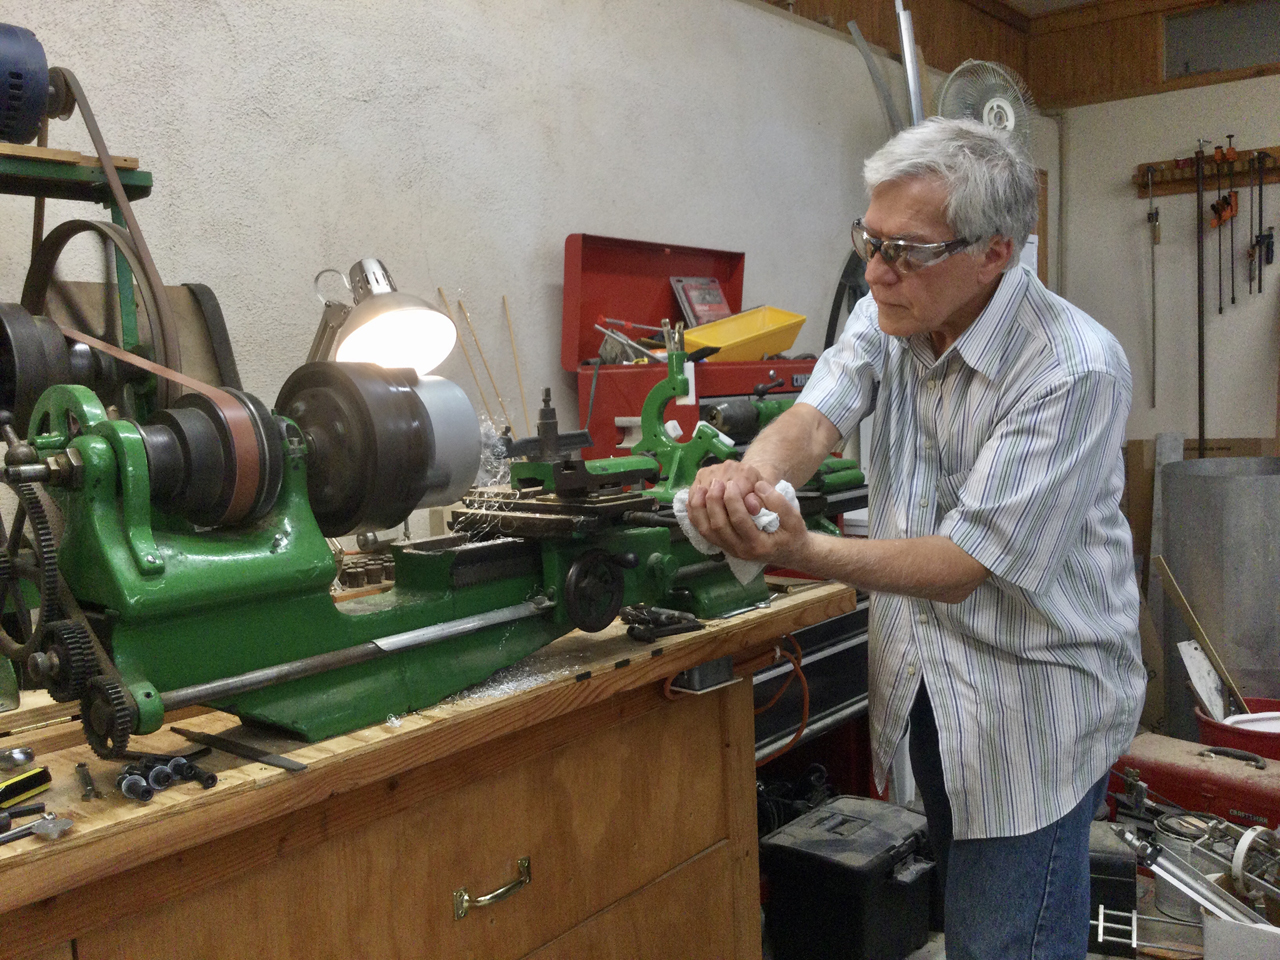 machining on an antique lathe